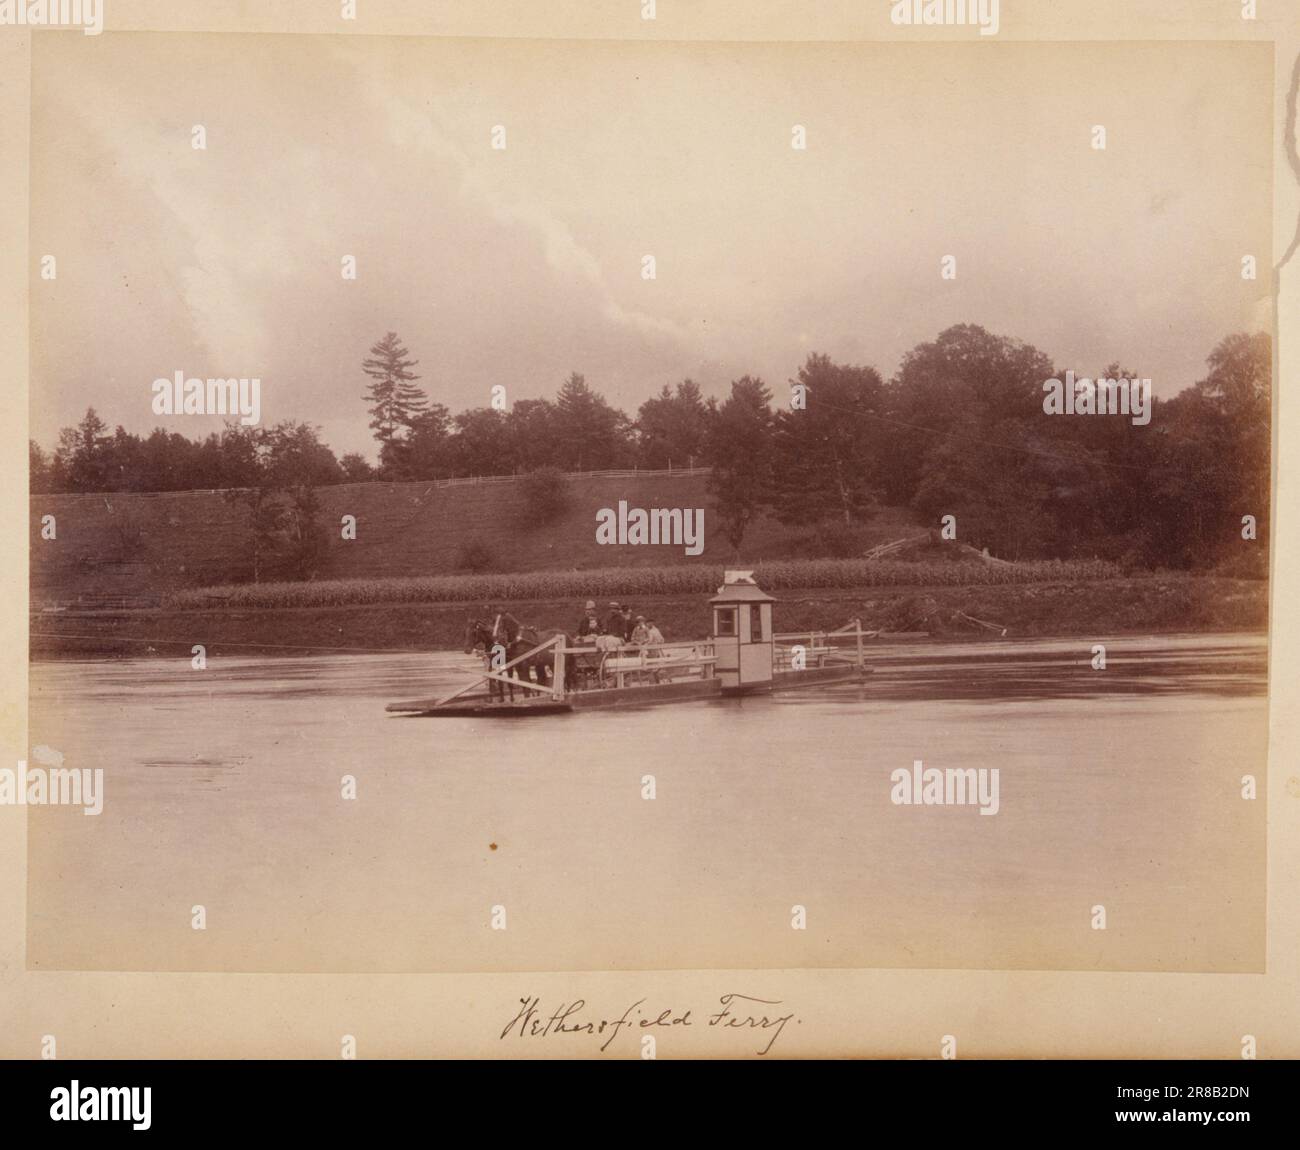 Wethersfield Ferry, dall'album views di Charlestown, New Hampshire 1888 di Gotthelf Pach, attivo 1880s Foto Stock